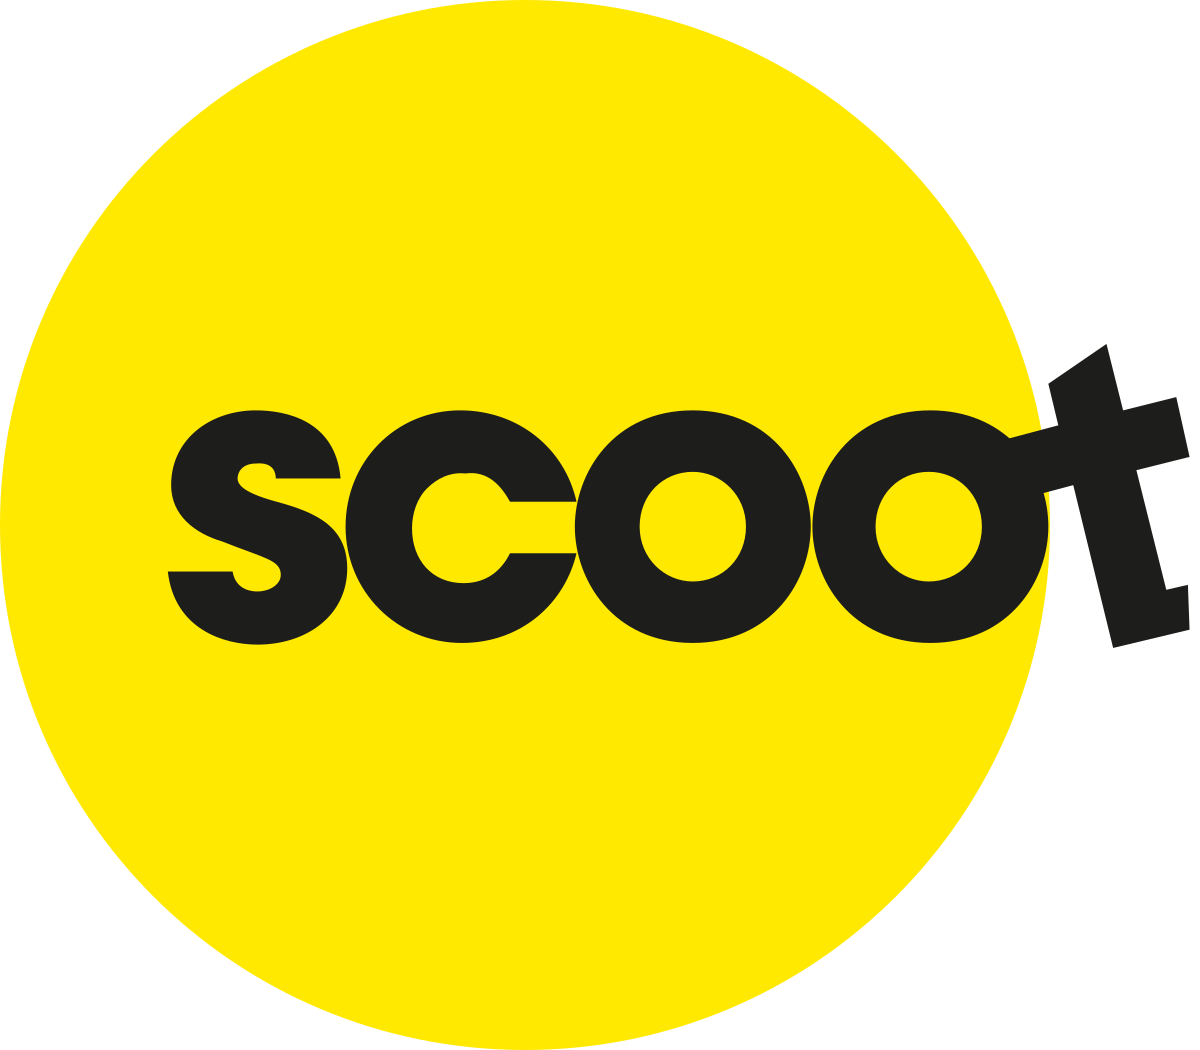 Scoot_logo